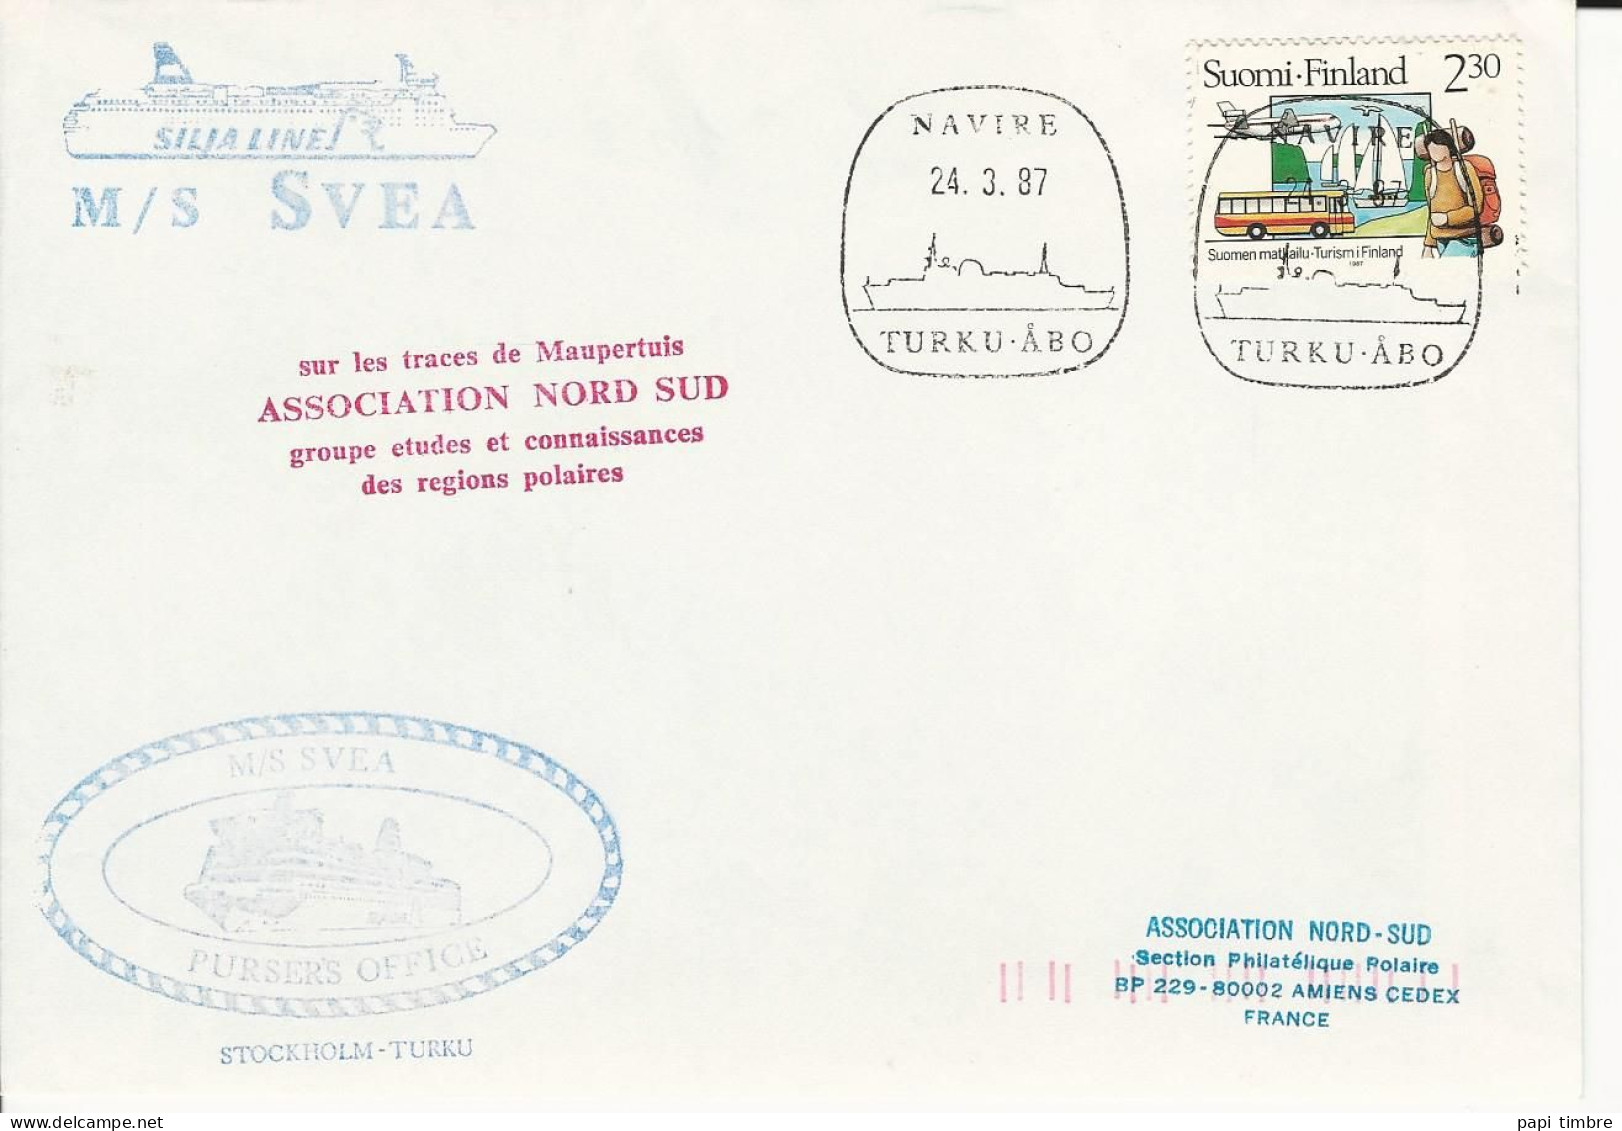 FINLANDE - Association Nord-Sud - M/S SVEA - Navire TURKU-ÂBO - 1987 - Research Programs